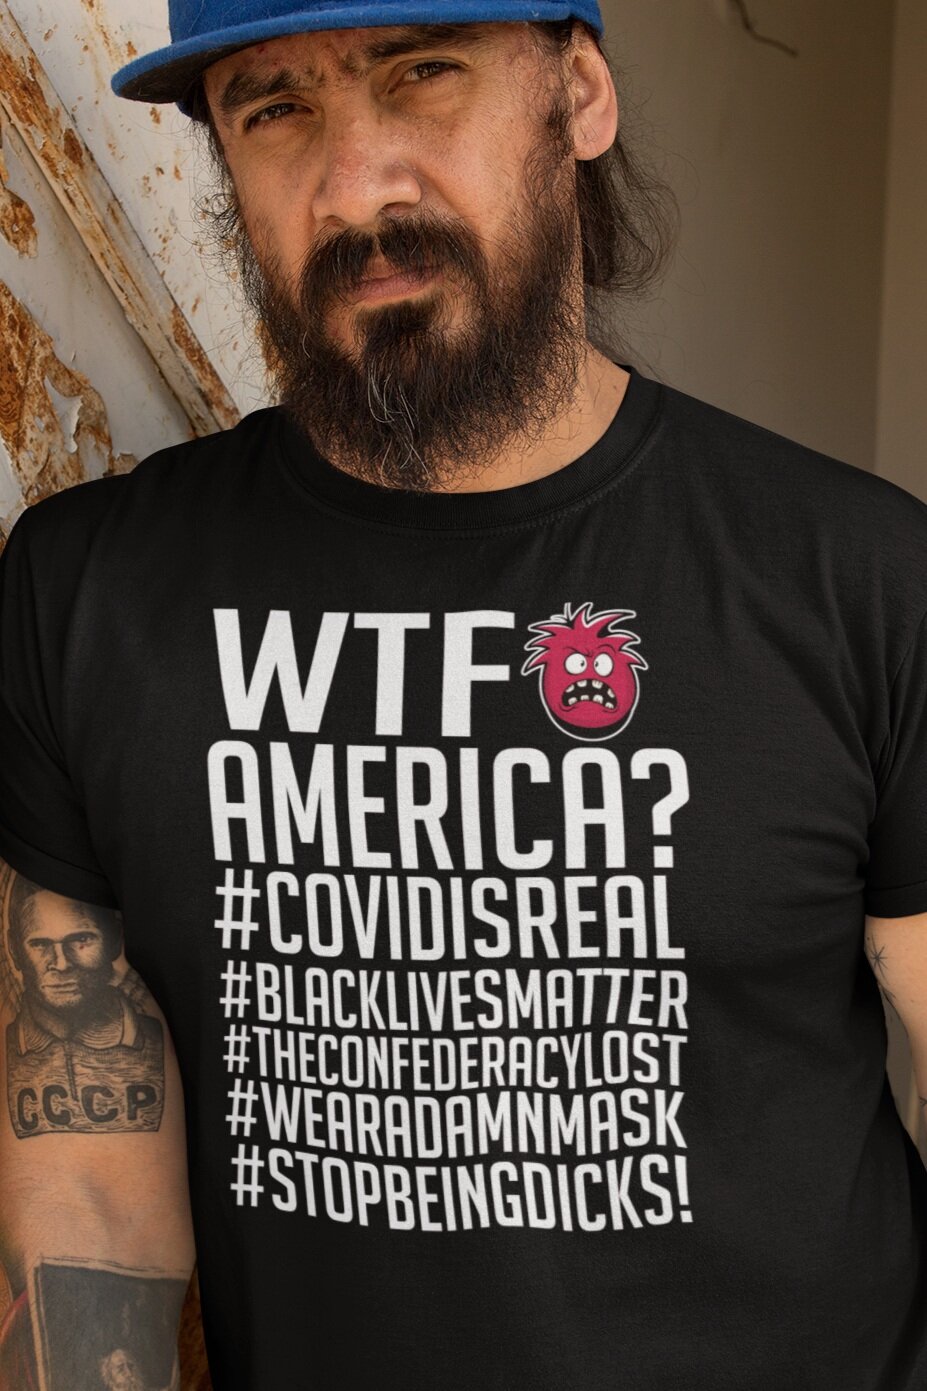 WTF America Hashtags Shirt